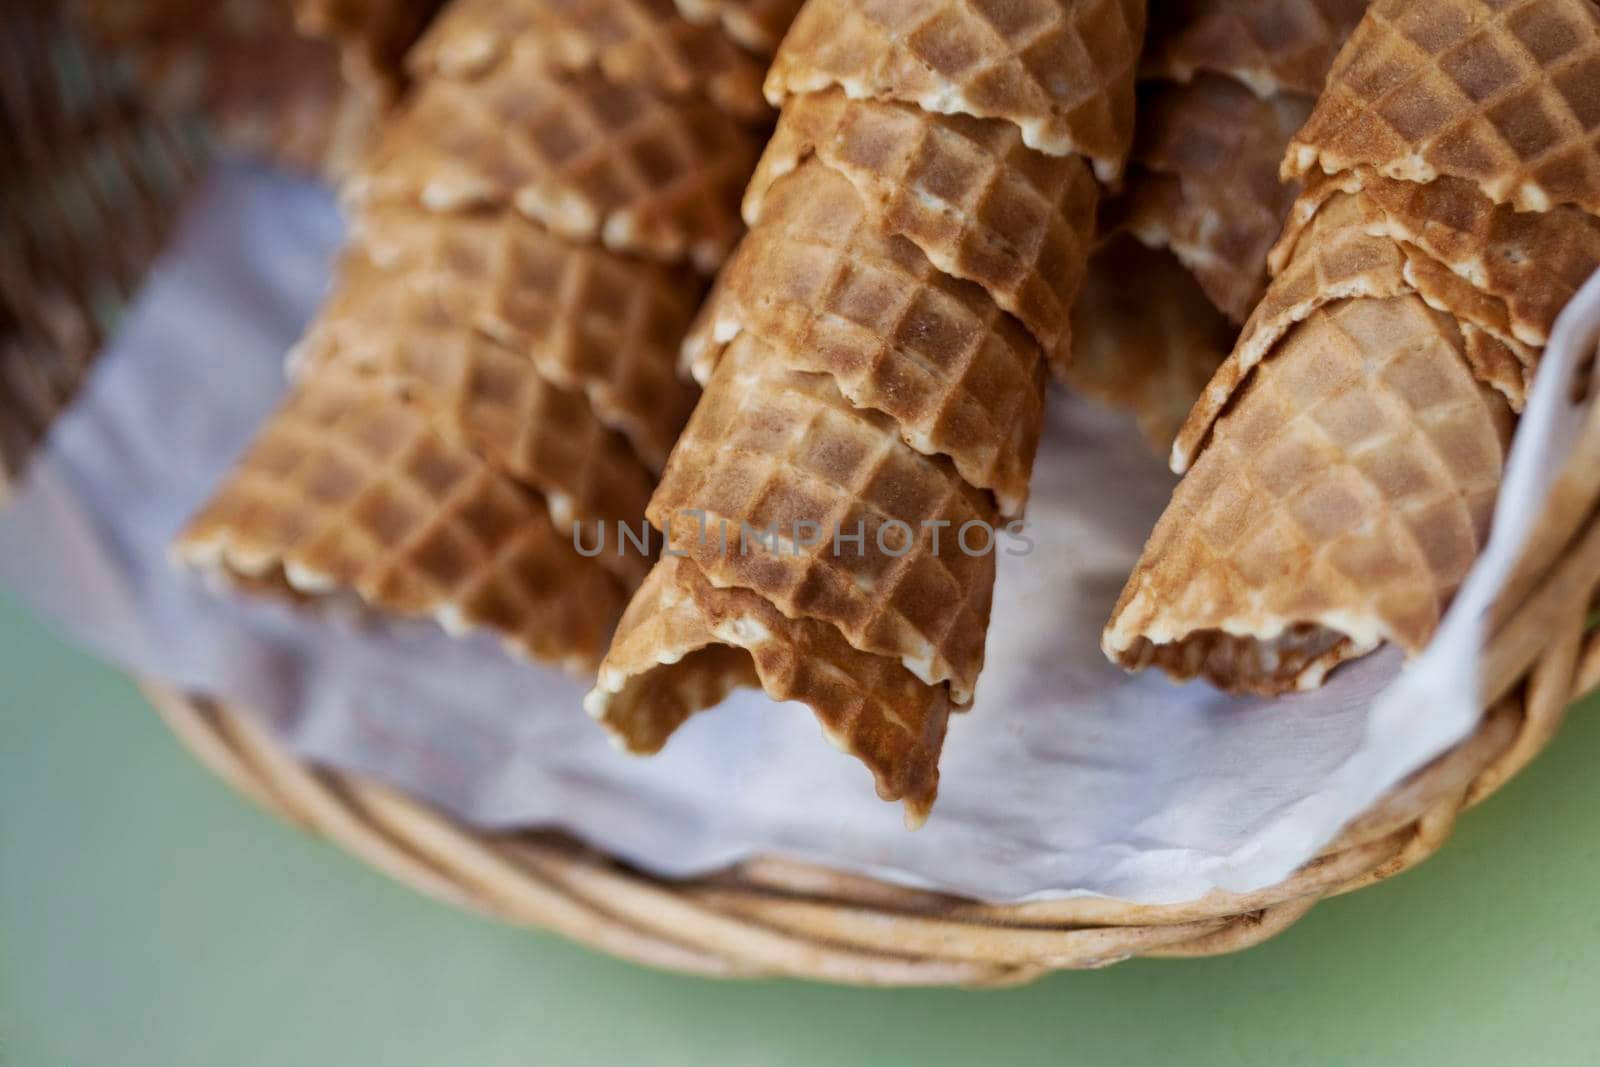 Ice cream cones on a wicker basket